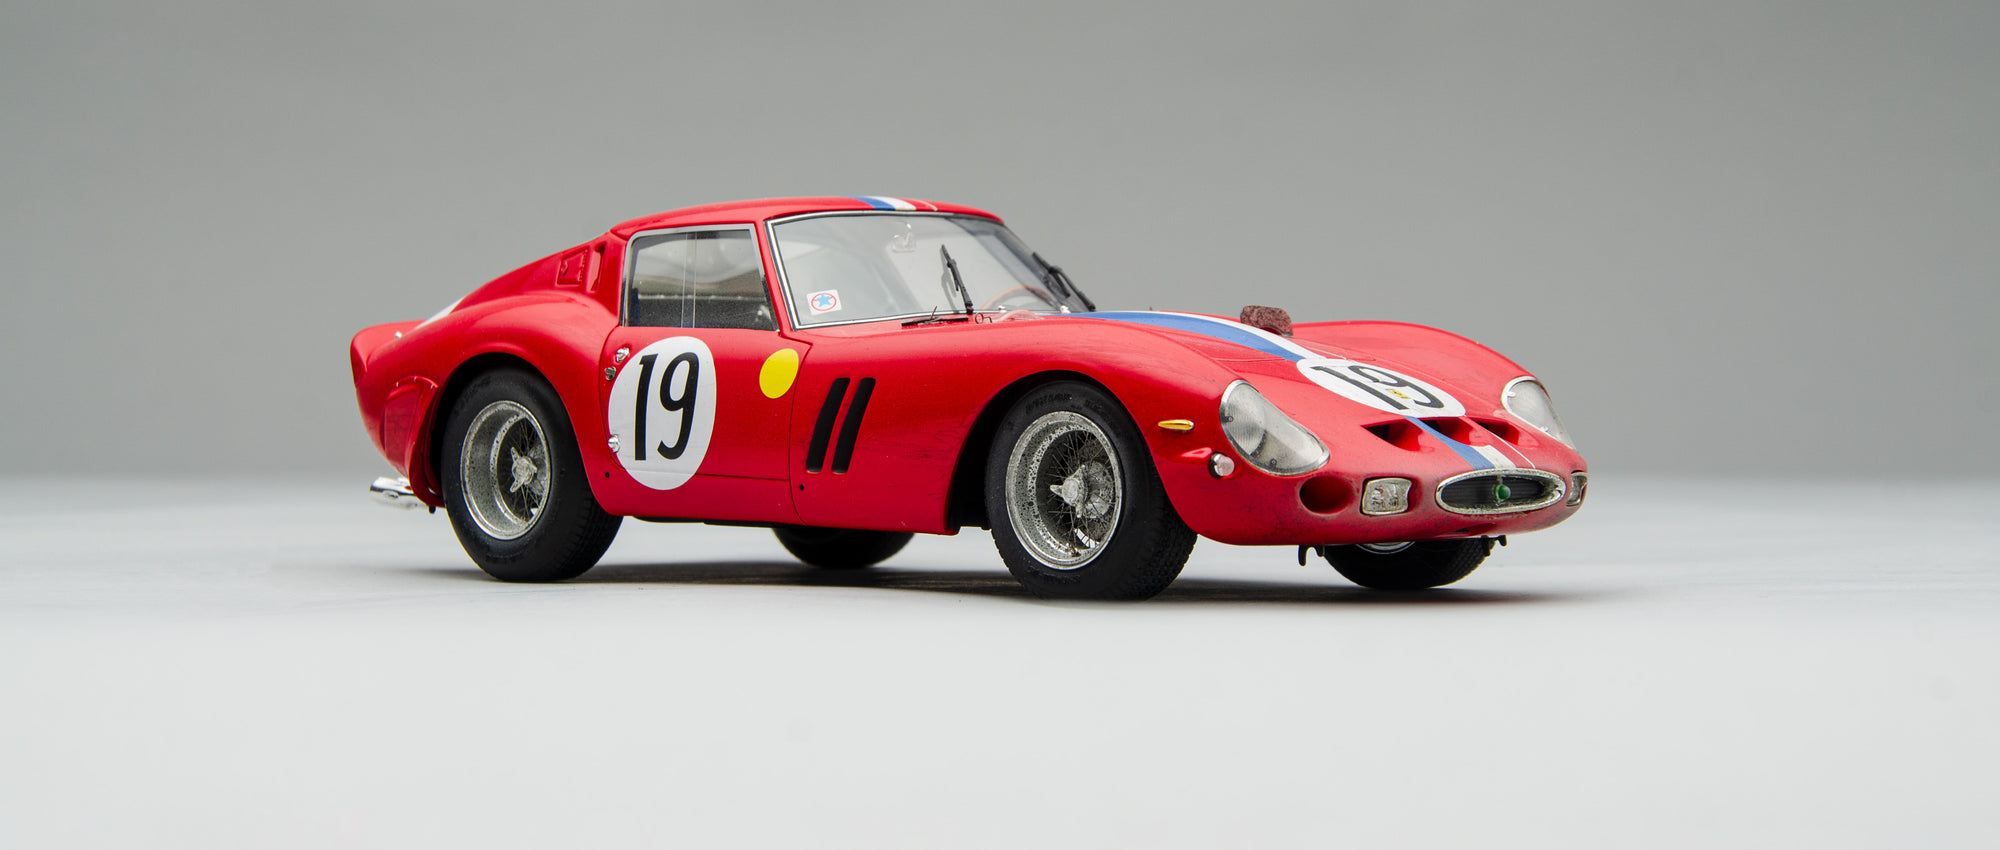 Ferrari 250 GTO - 3705GT - Sieger der Le-Mans-Klasse von 1962 - Race Weathered